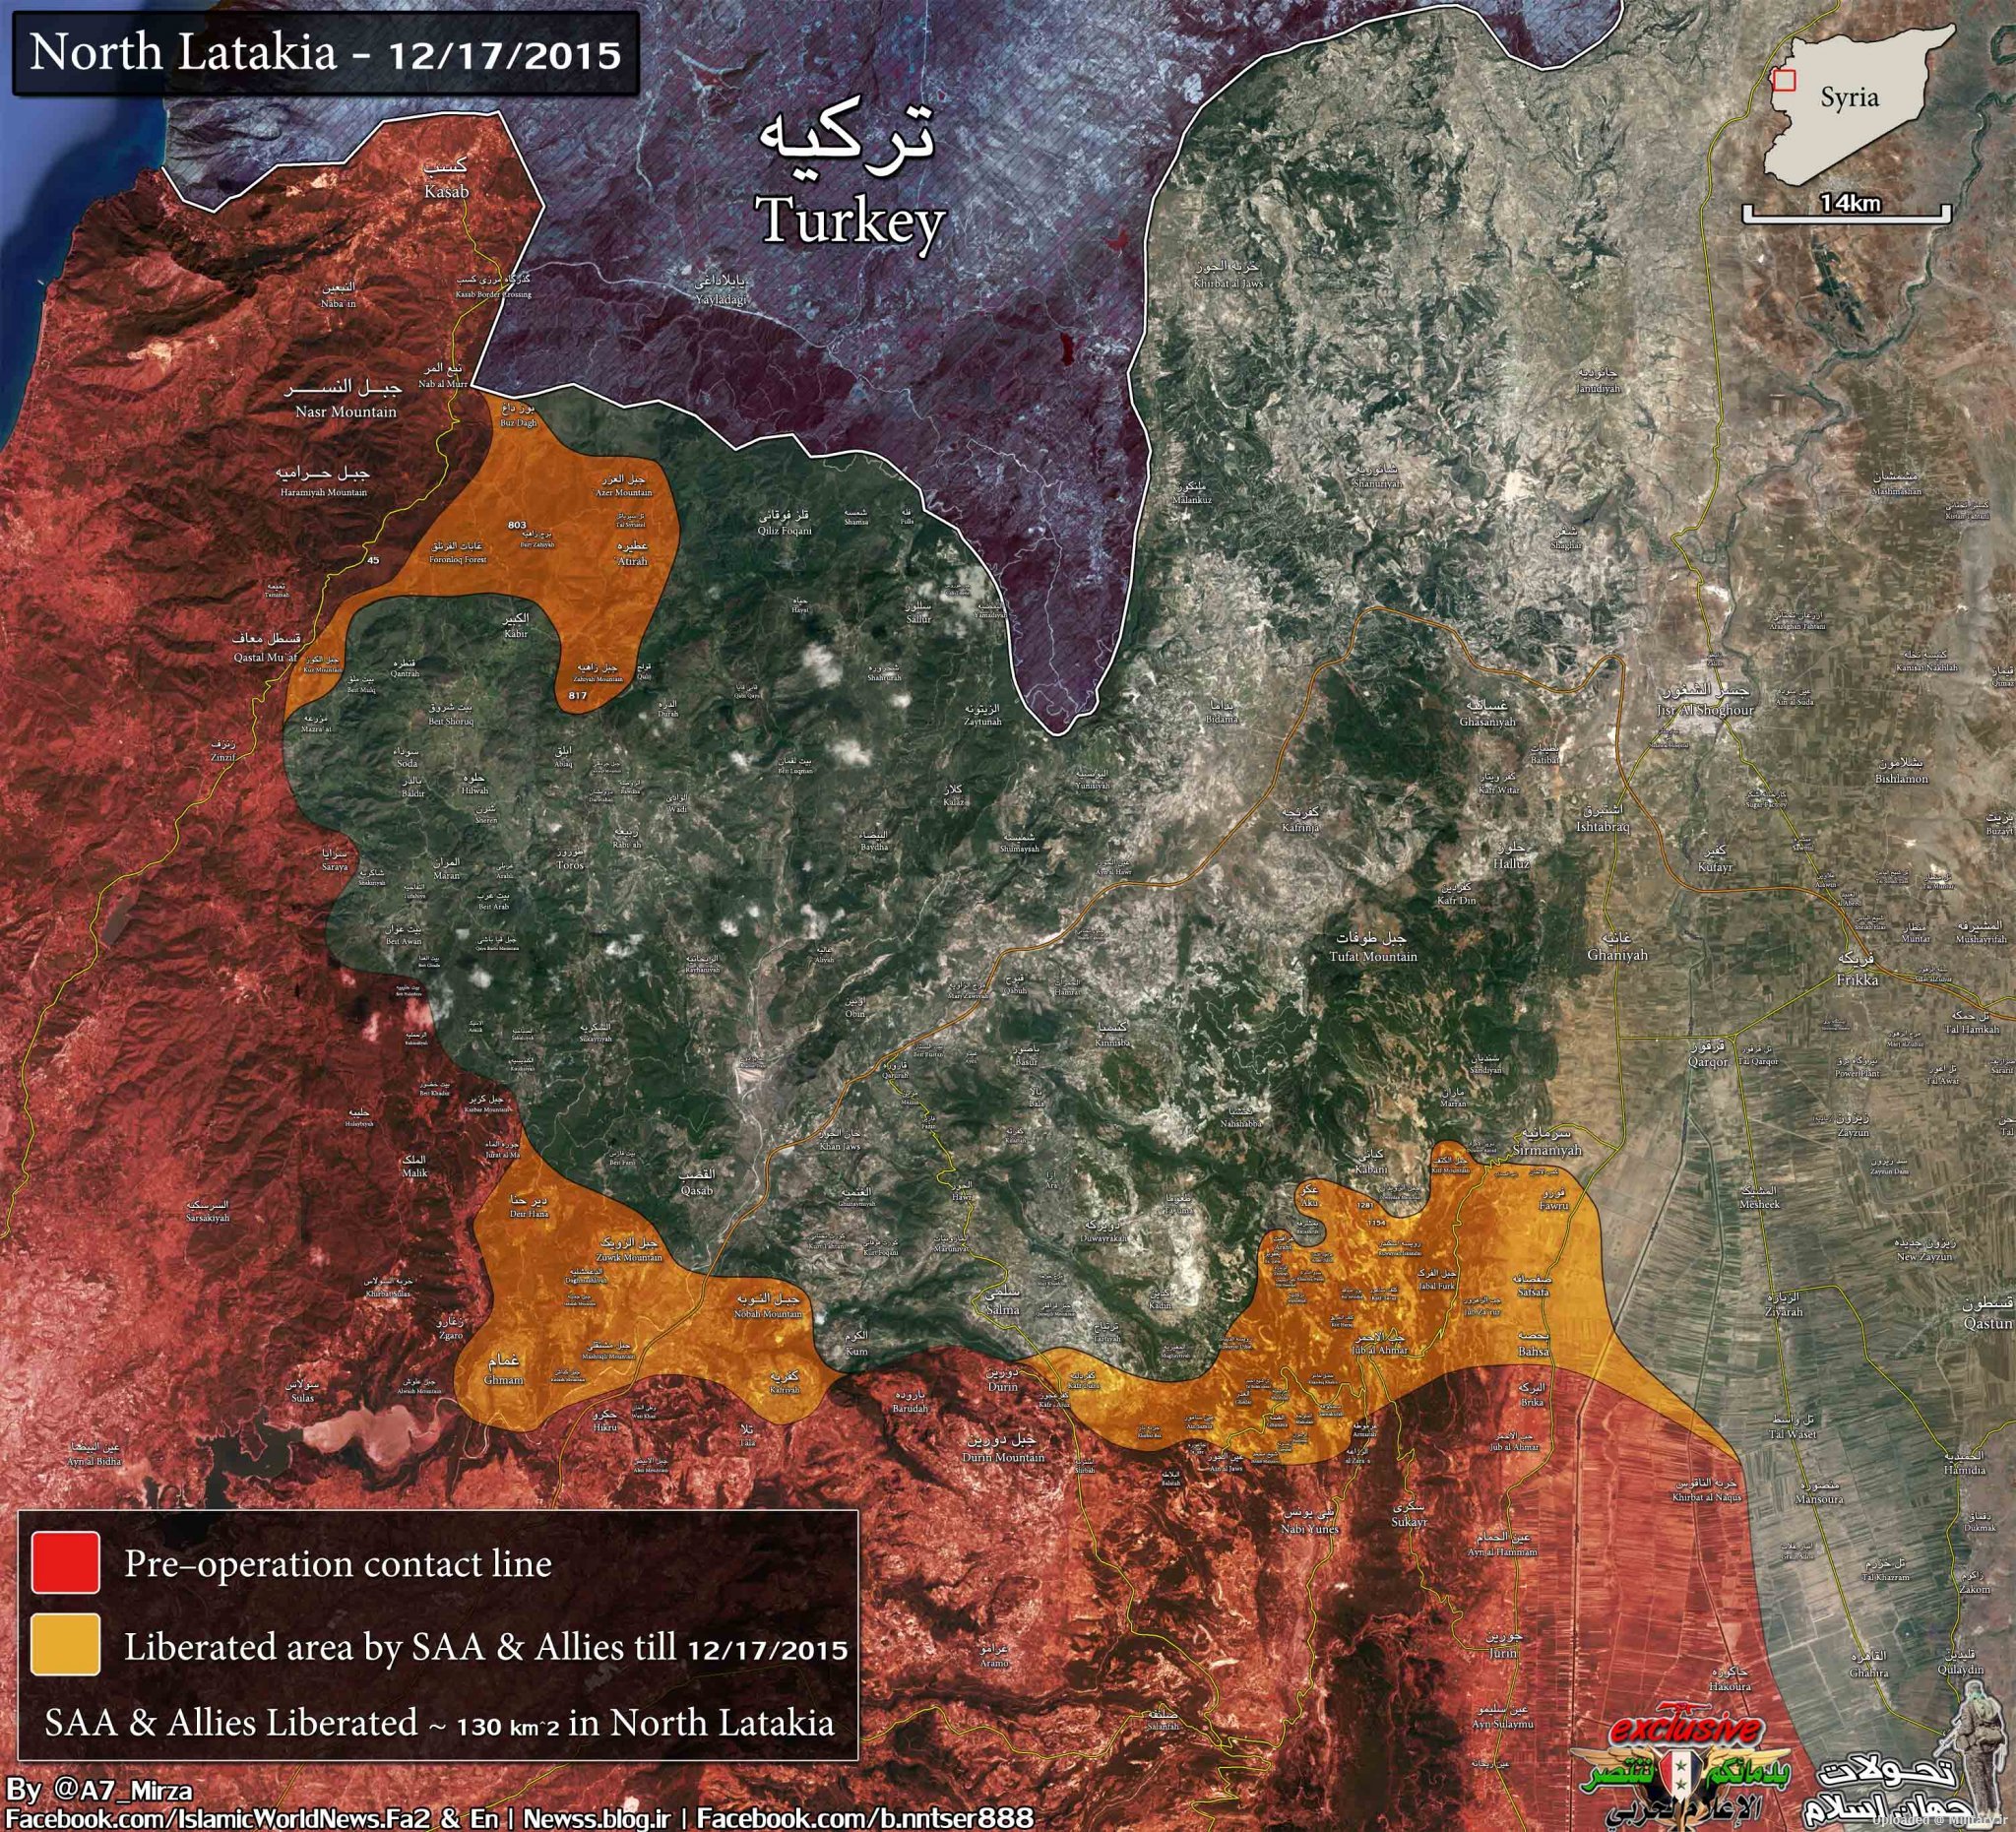 North_Latakia_14km_17dec_26azar_with_Librated_area_loww.JPG